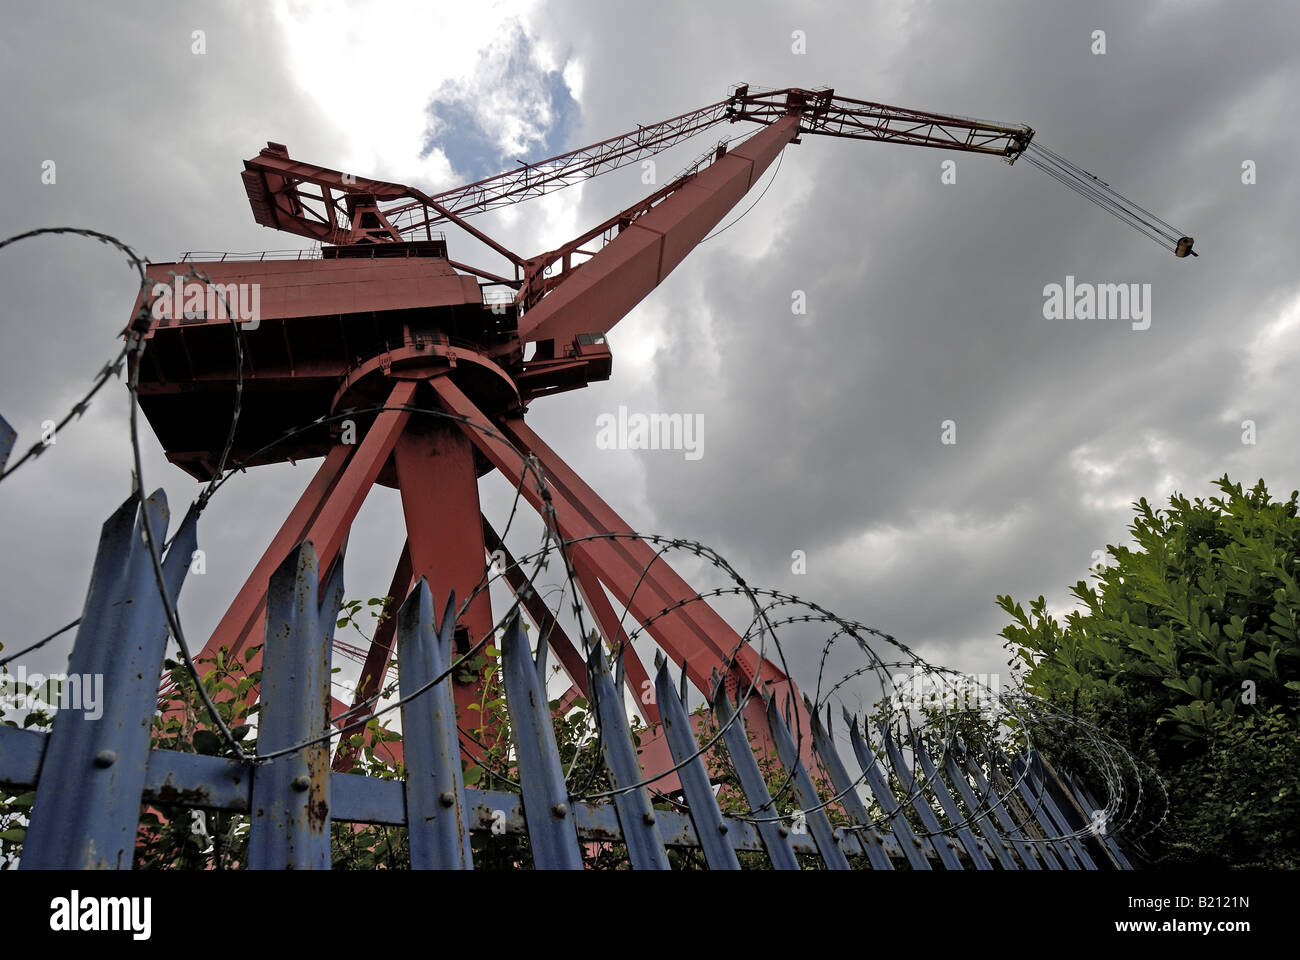 Cranes in Swan Hunter's shipyard, Wallsend, Tyneside. Stock Photo